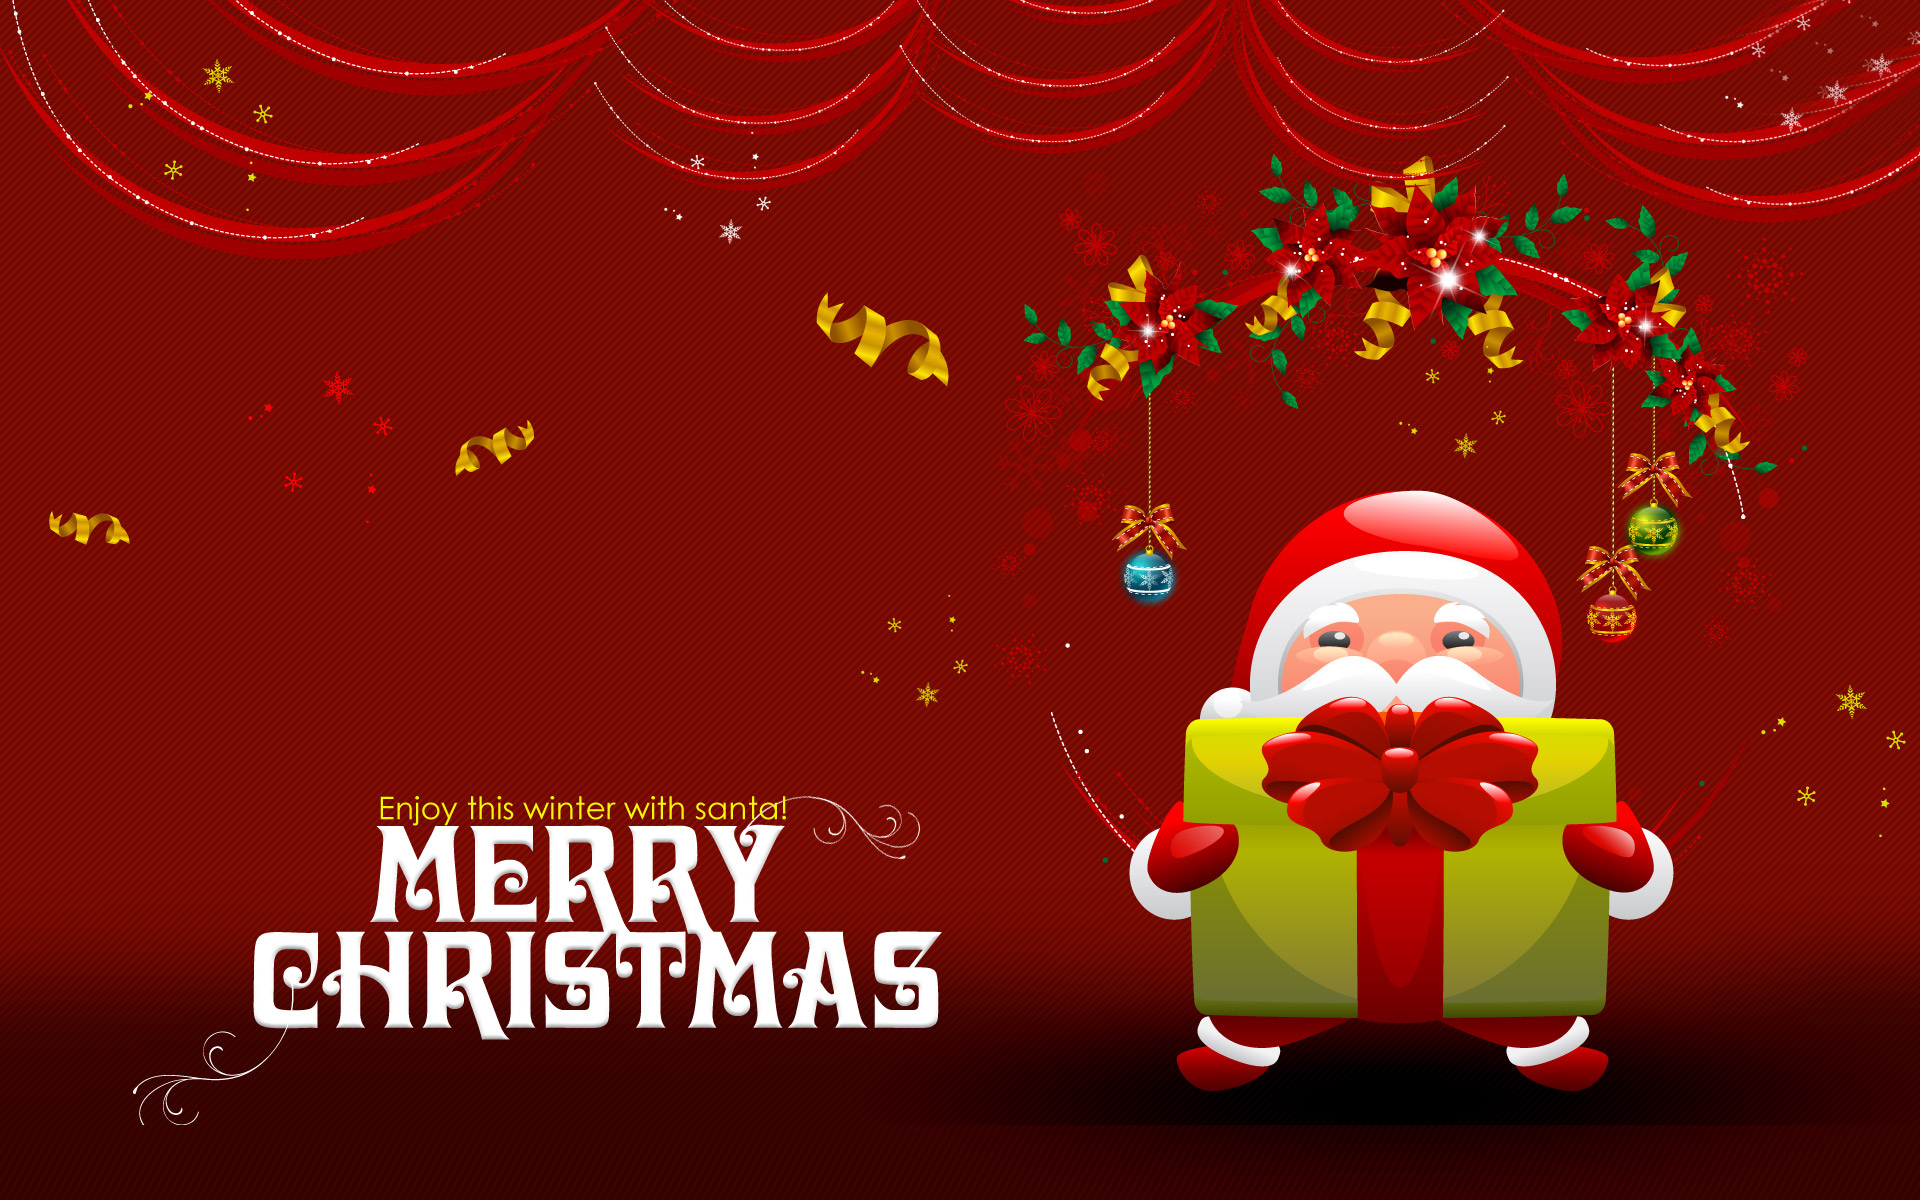 Merry Christmas Wallpapers Red Free Download | PixelsTalk.Net